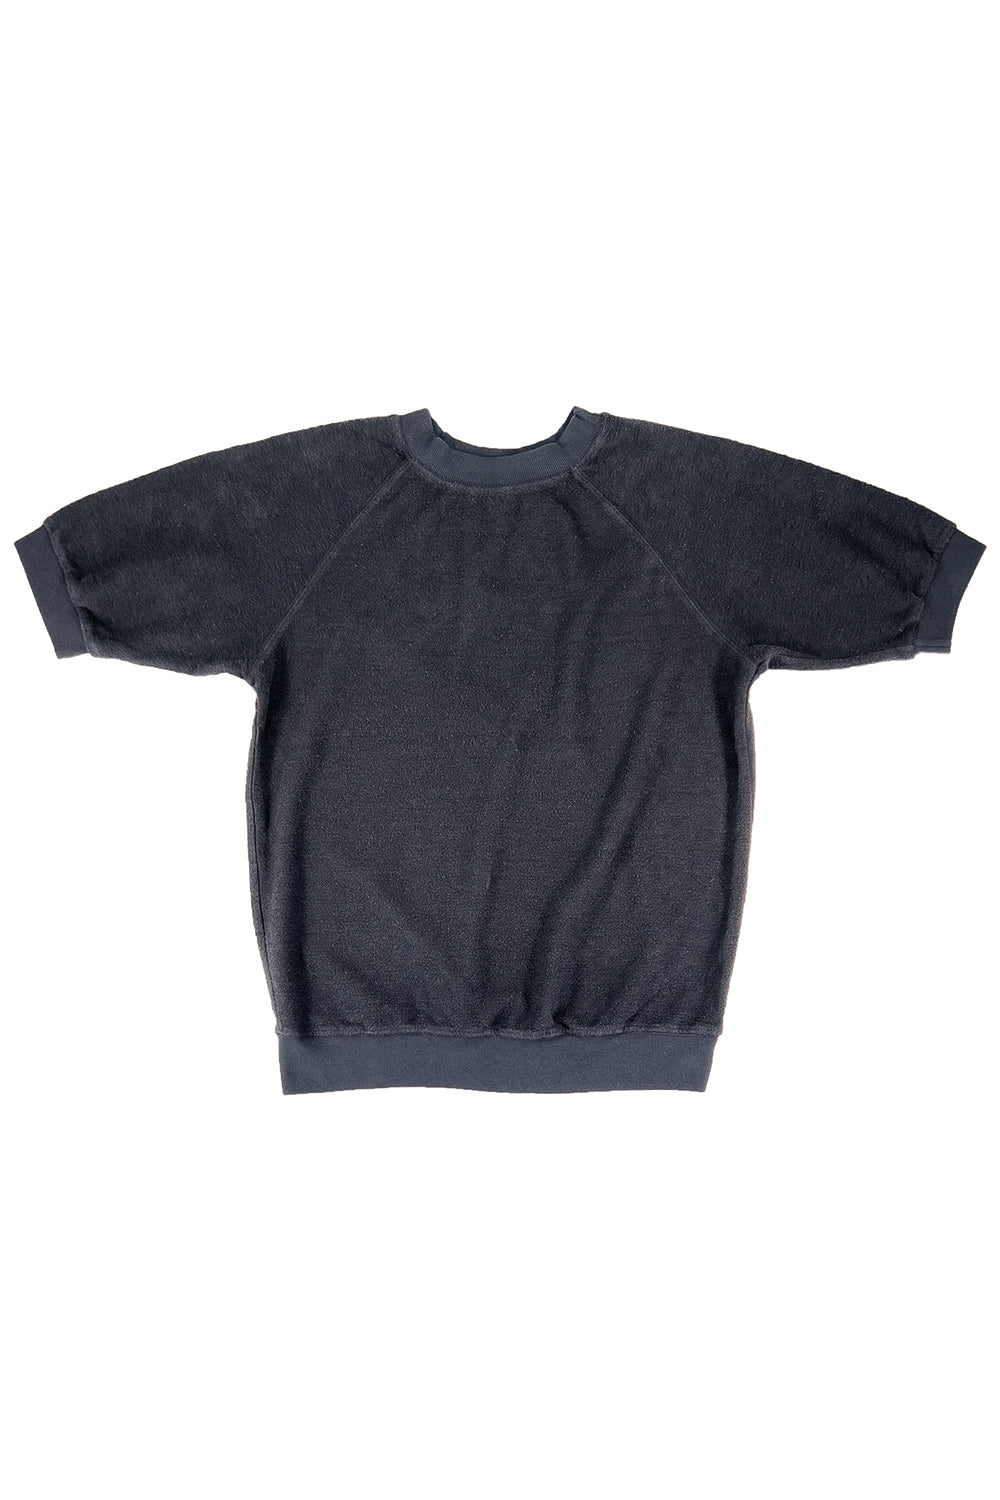 Short Sleeve Raglan Sherpa Sweatshirt | Jungmaven Hemp Clothing & Accessories / Color: Black